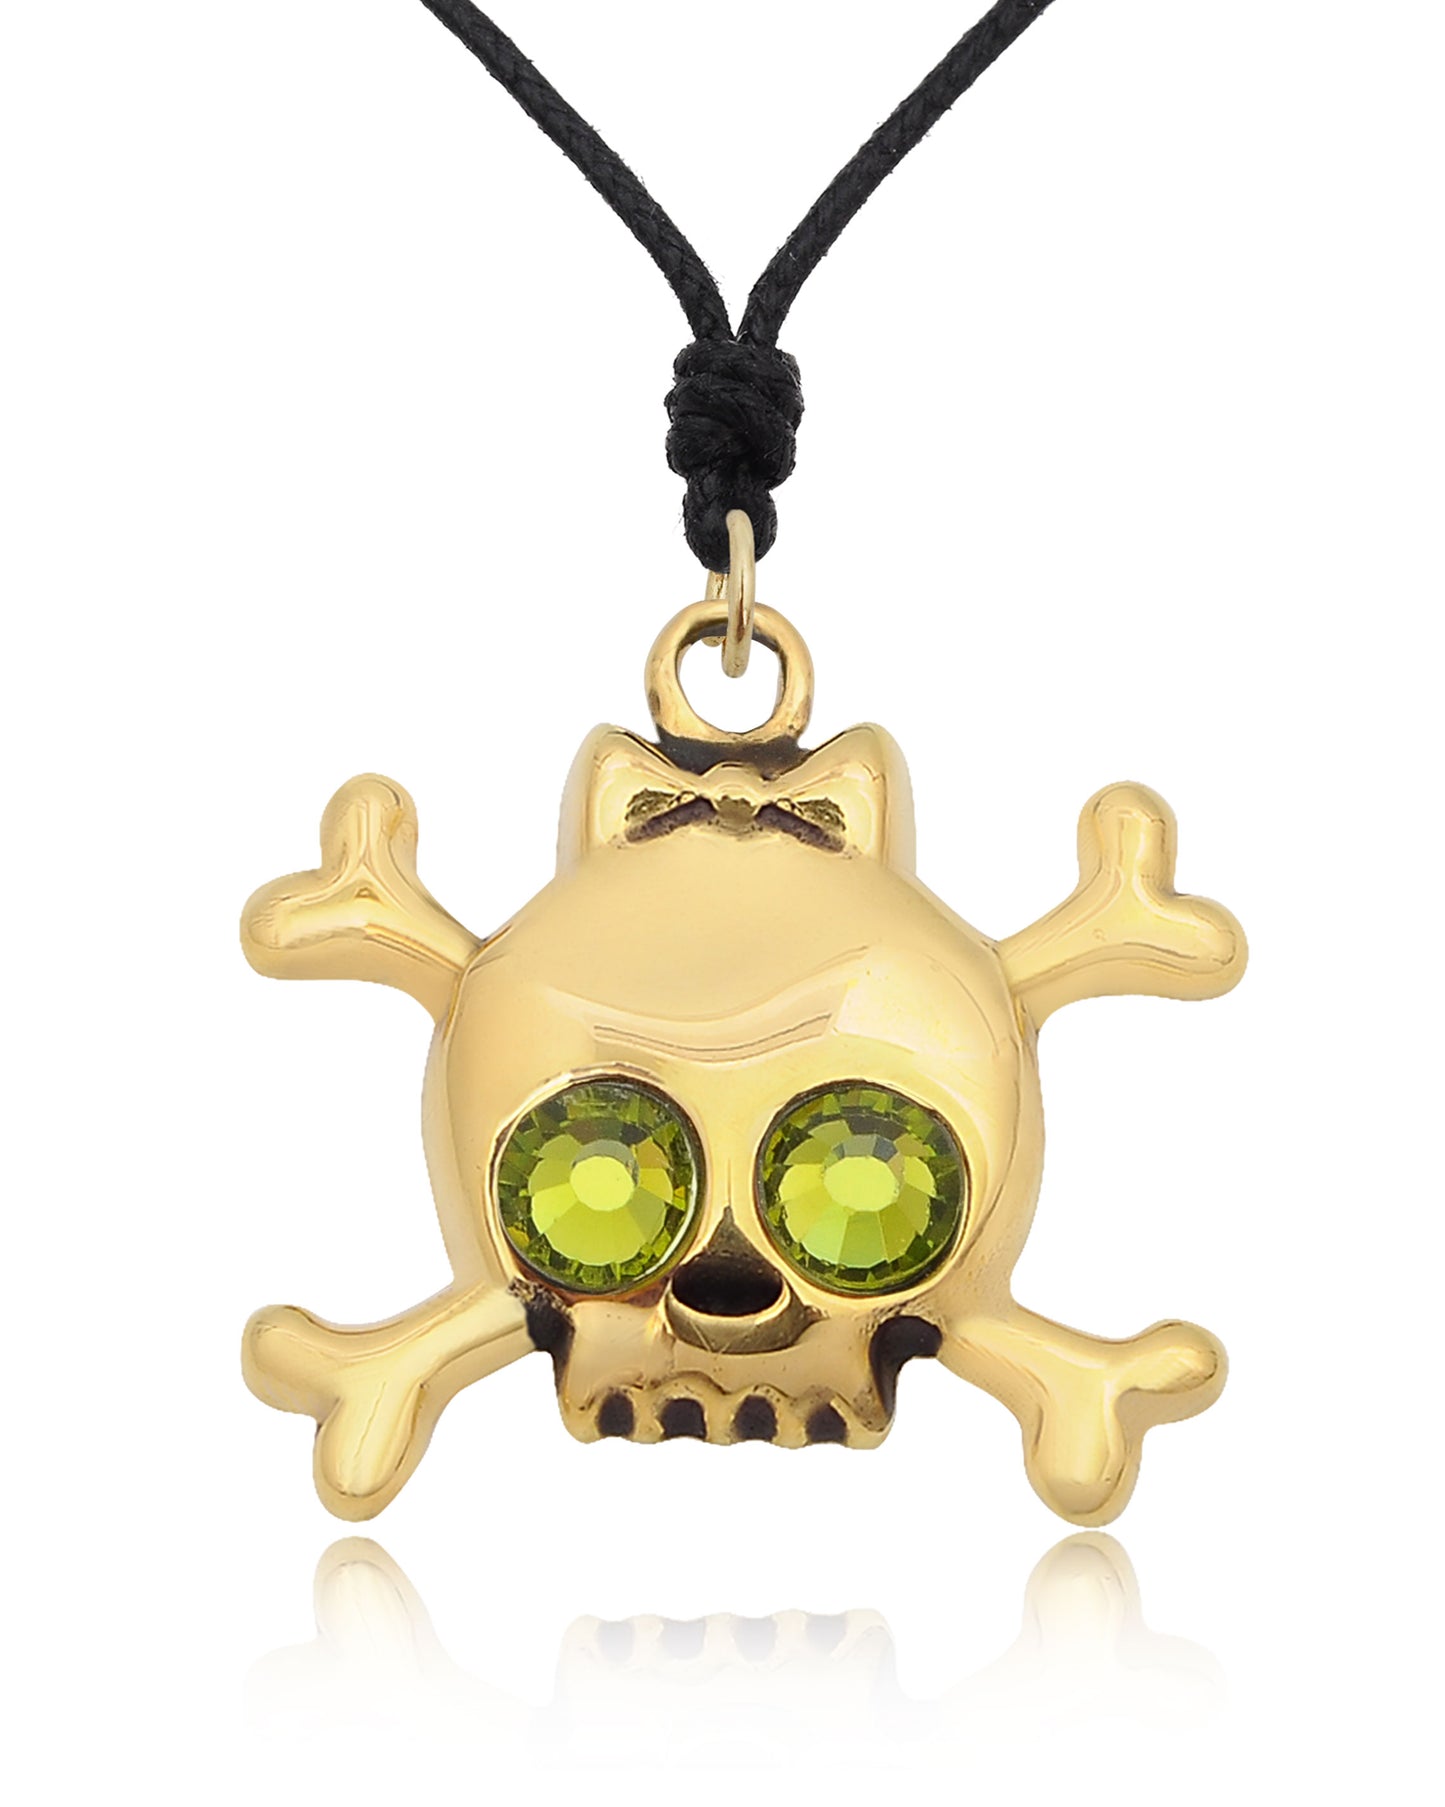 Skull & Crossbones Handmade Gold Brass Charm Necklace Pendant Jewelry